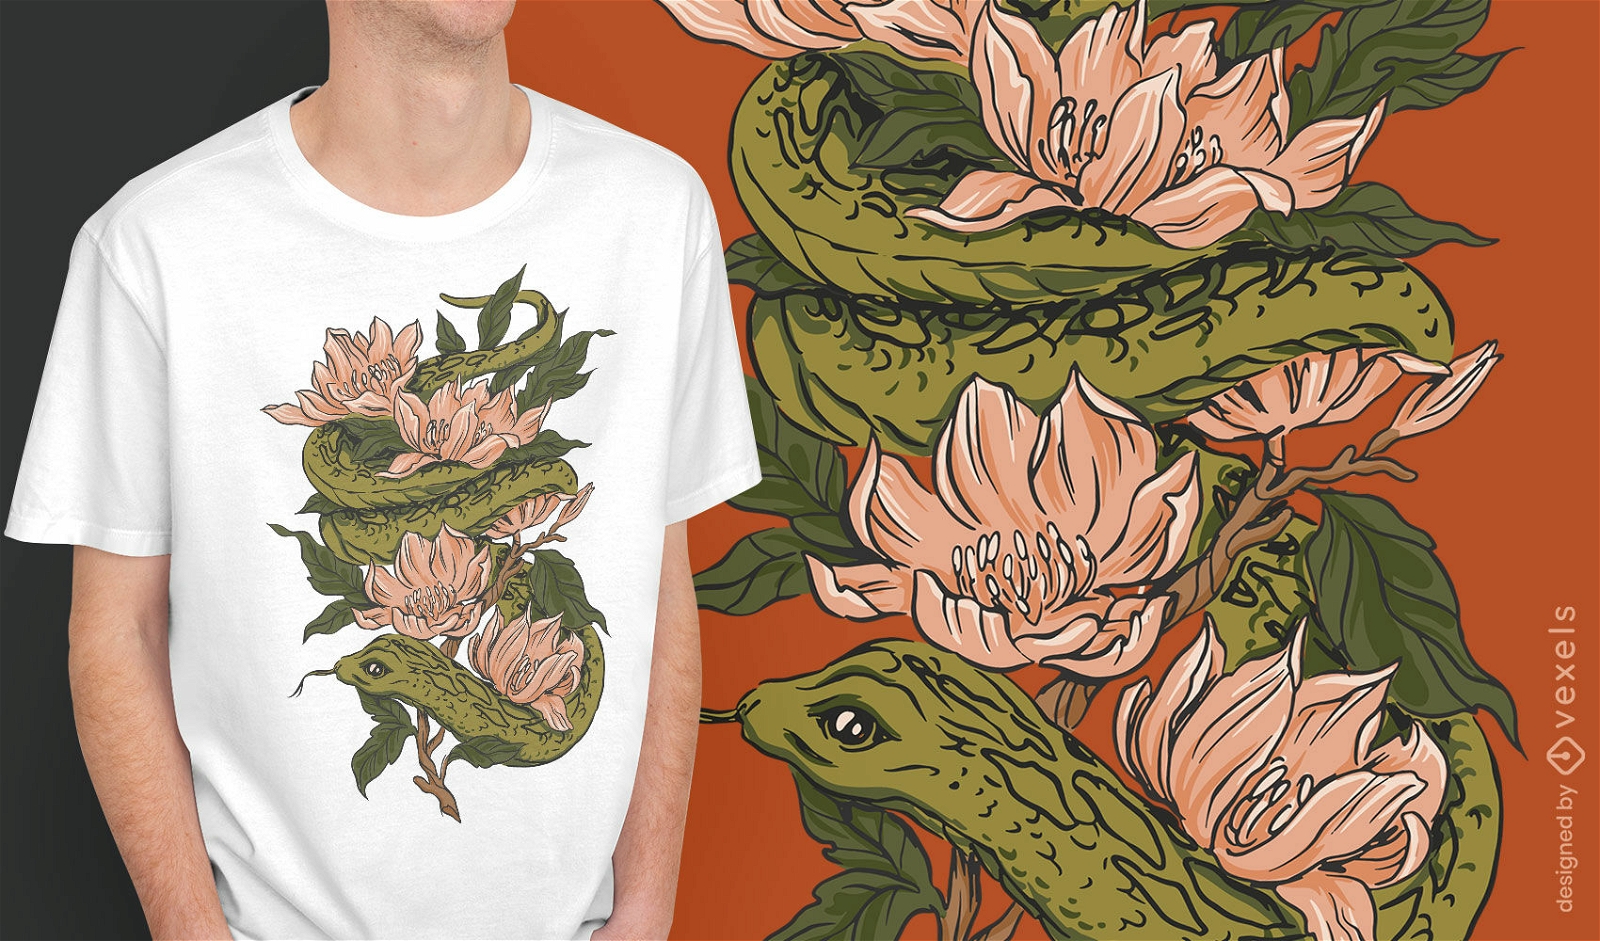 Magnolia snake nature t-shirt design